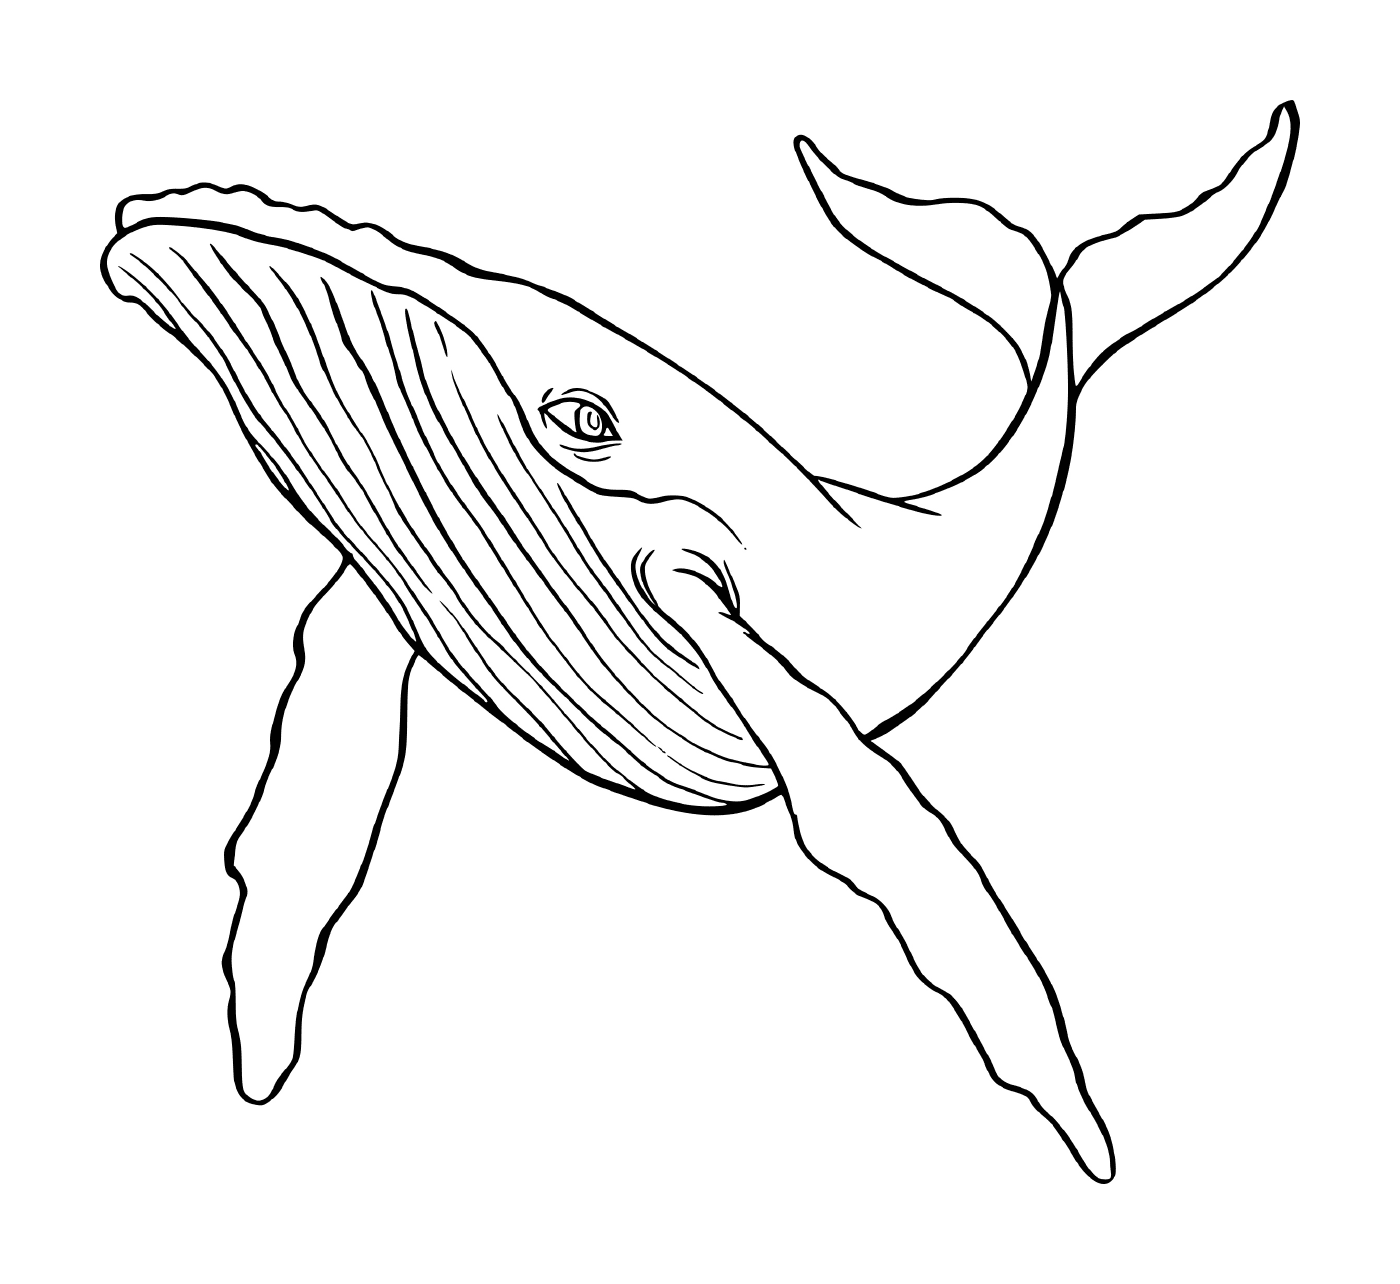  Горбатый кит 